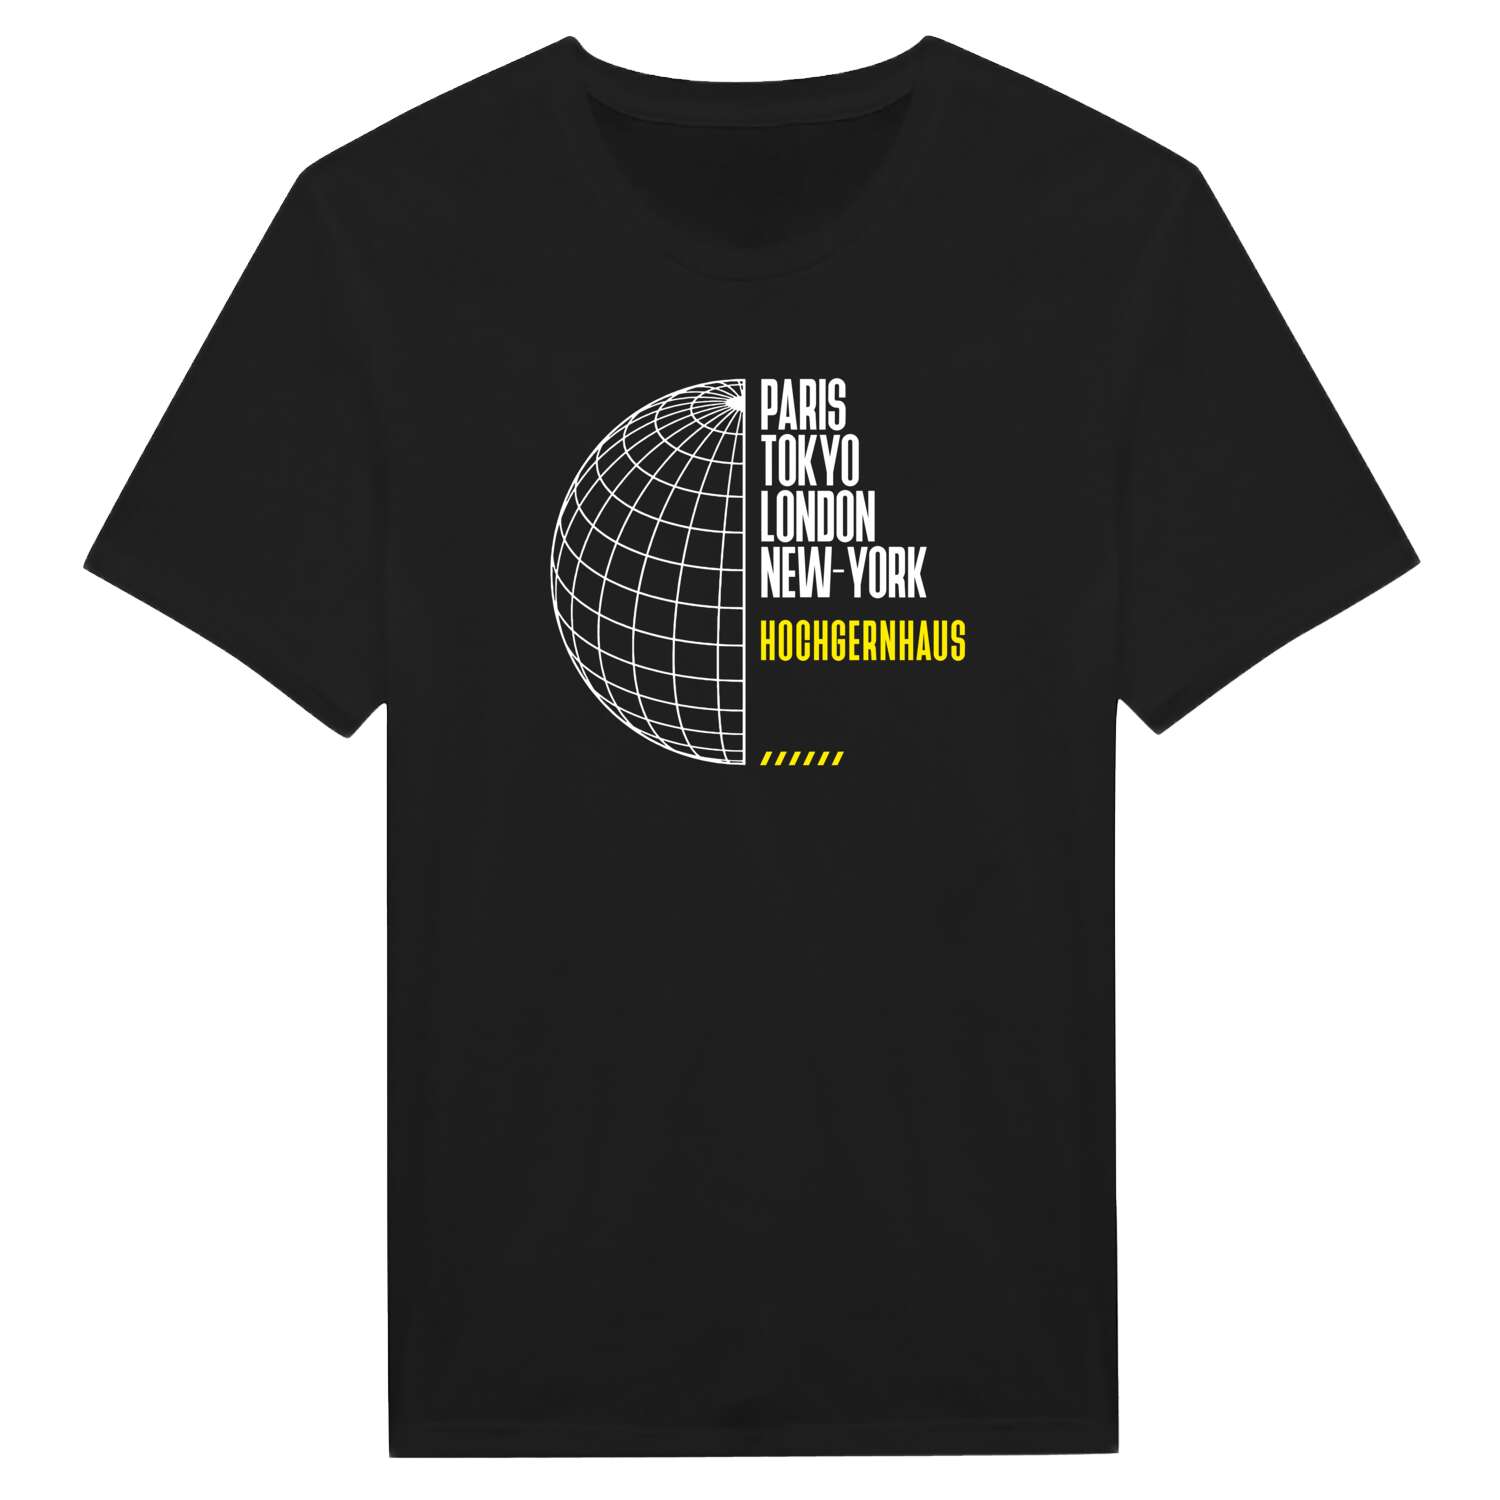 Hochgernhaus T-Shirt »Paris Tokyo London«